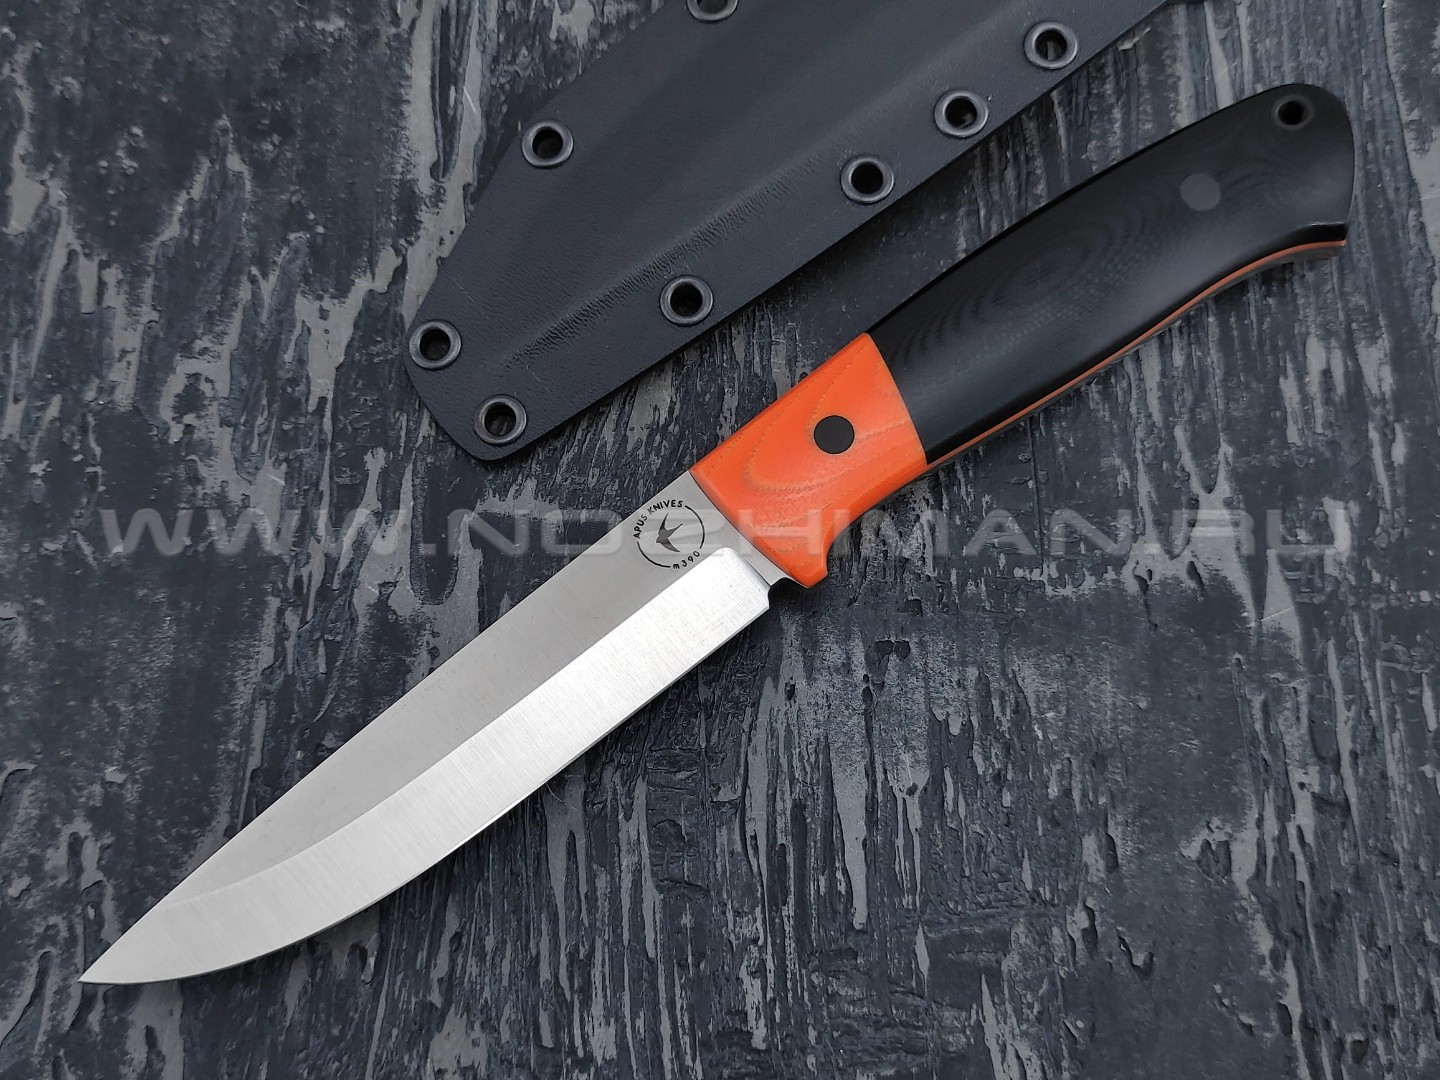 Apus Knives нож Maverick сталь M390, рукоять G10 black & orange